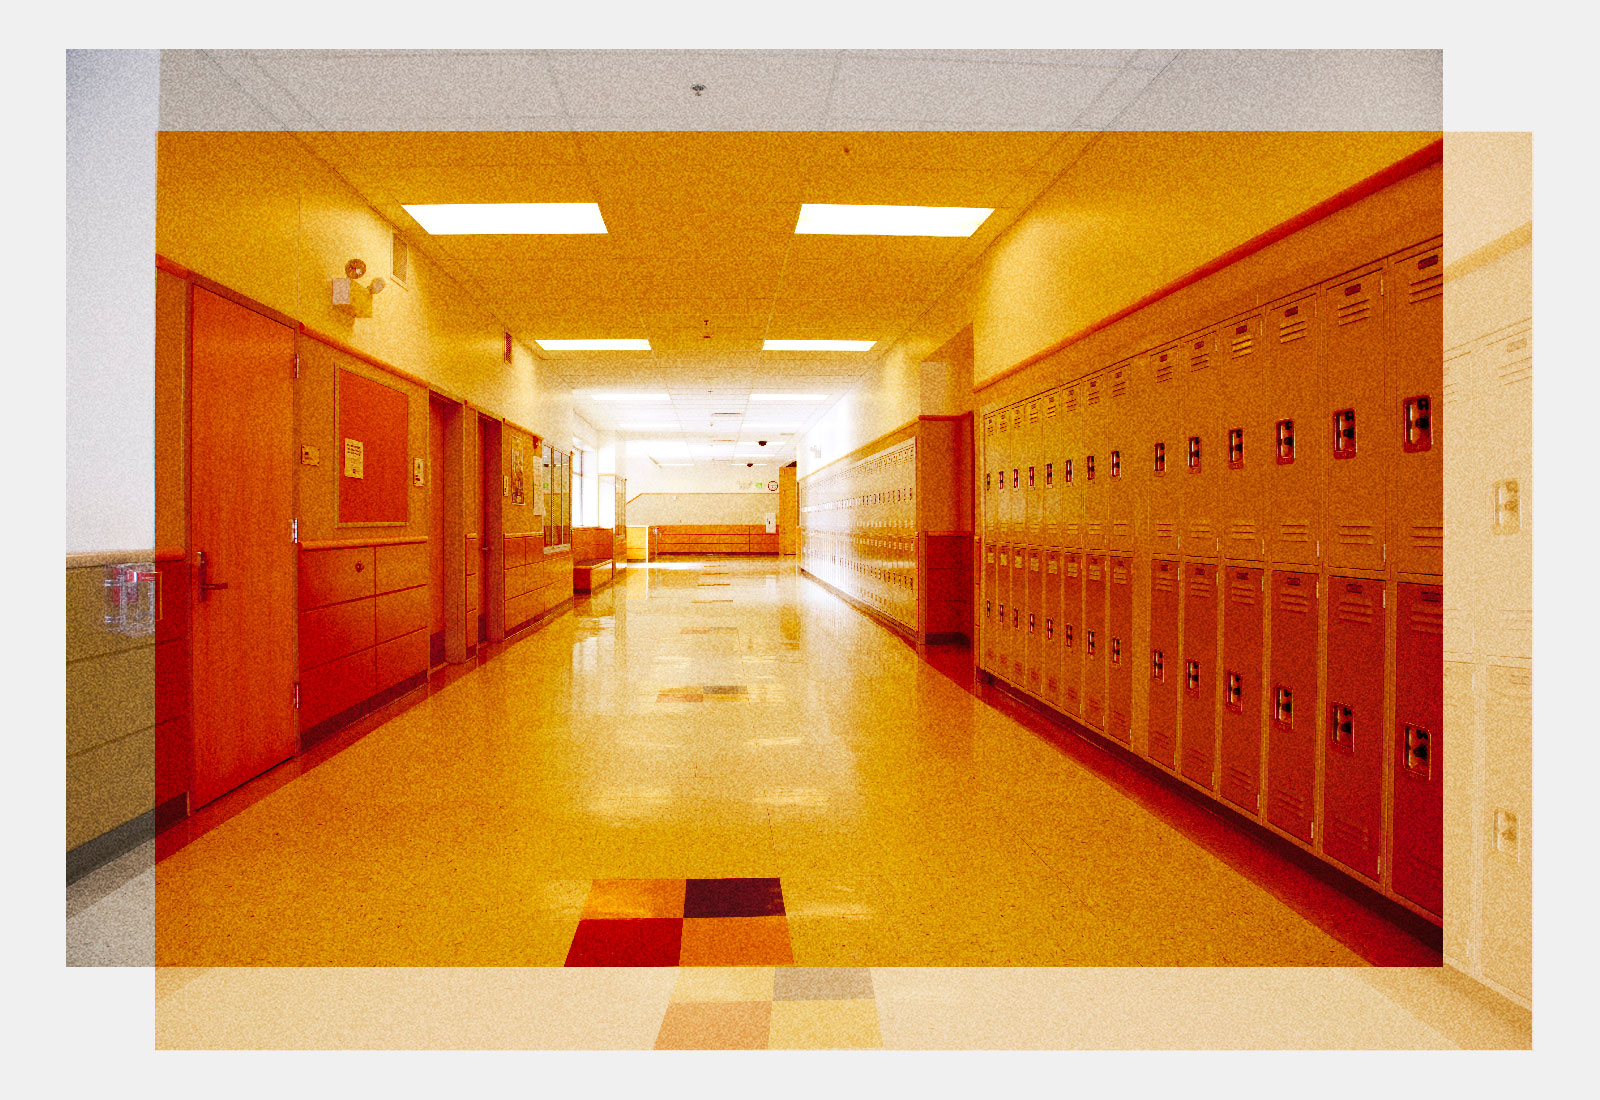 An empty school hallway with an orange color overlay